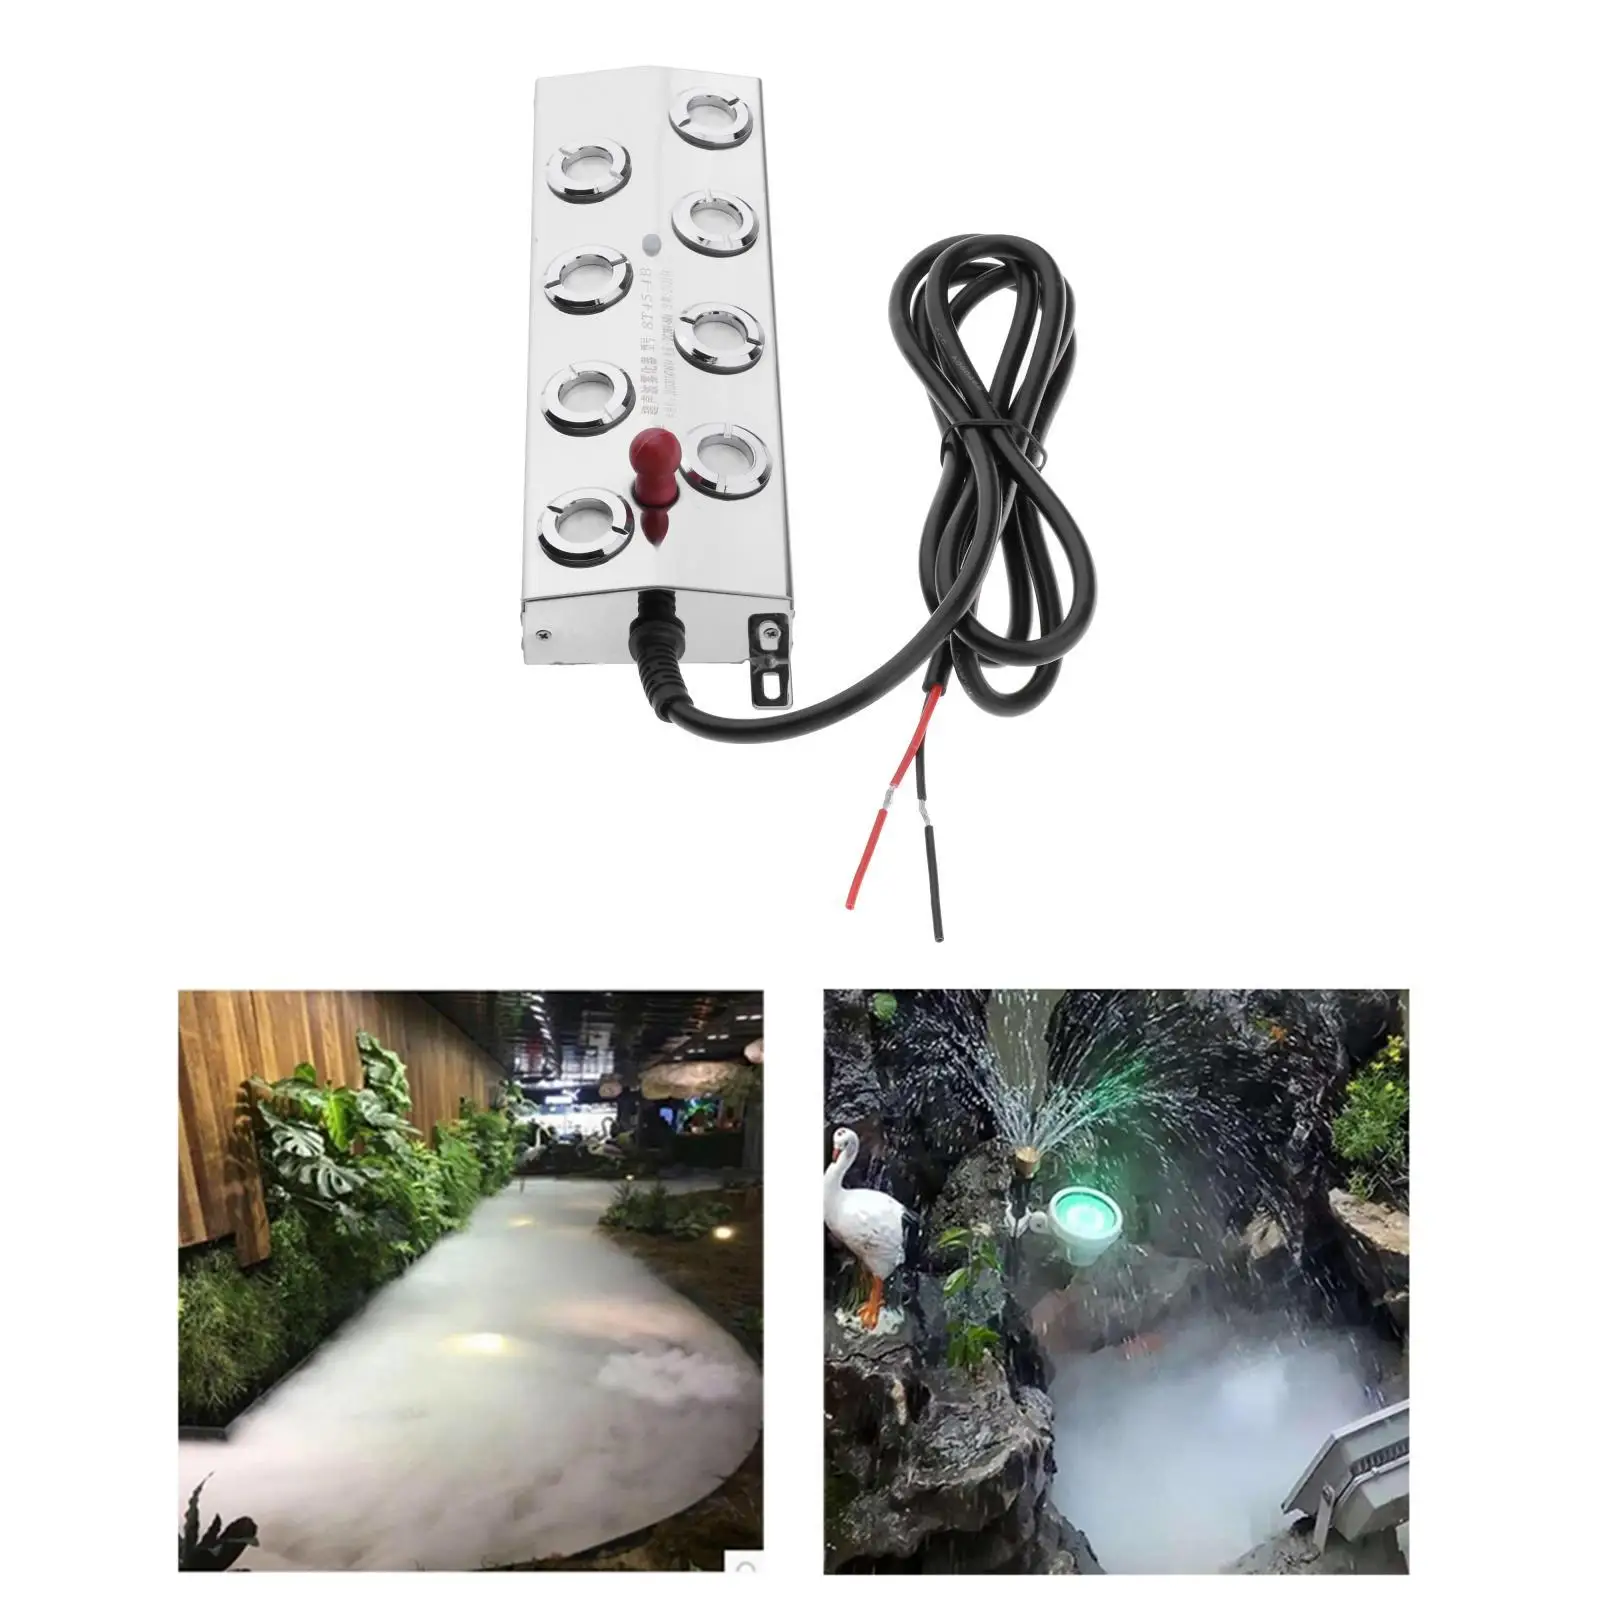 Ultrasonic Mist Fog Maker Swimming Pool Pond Fogger Atomizer Air Humidifier